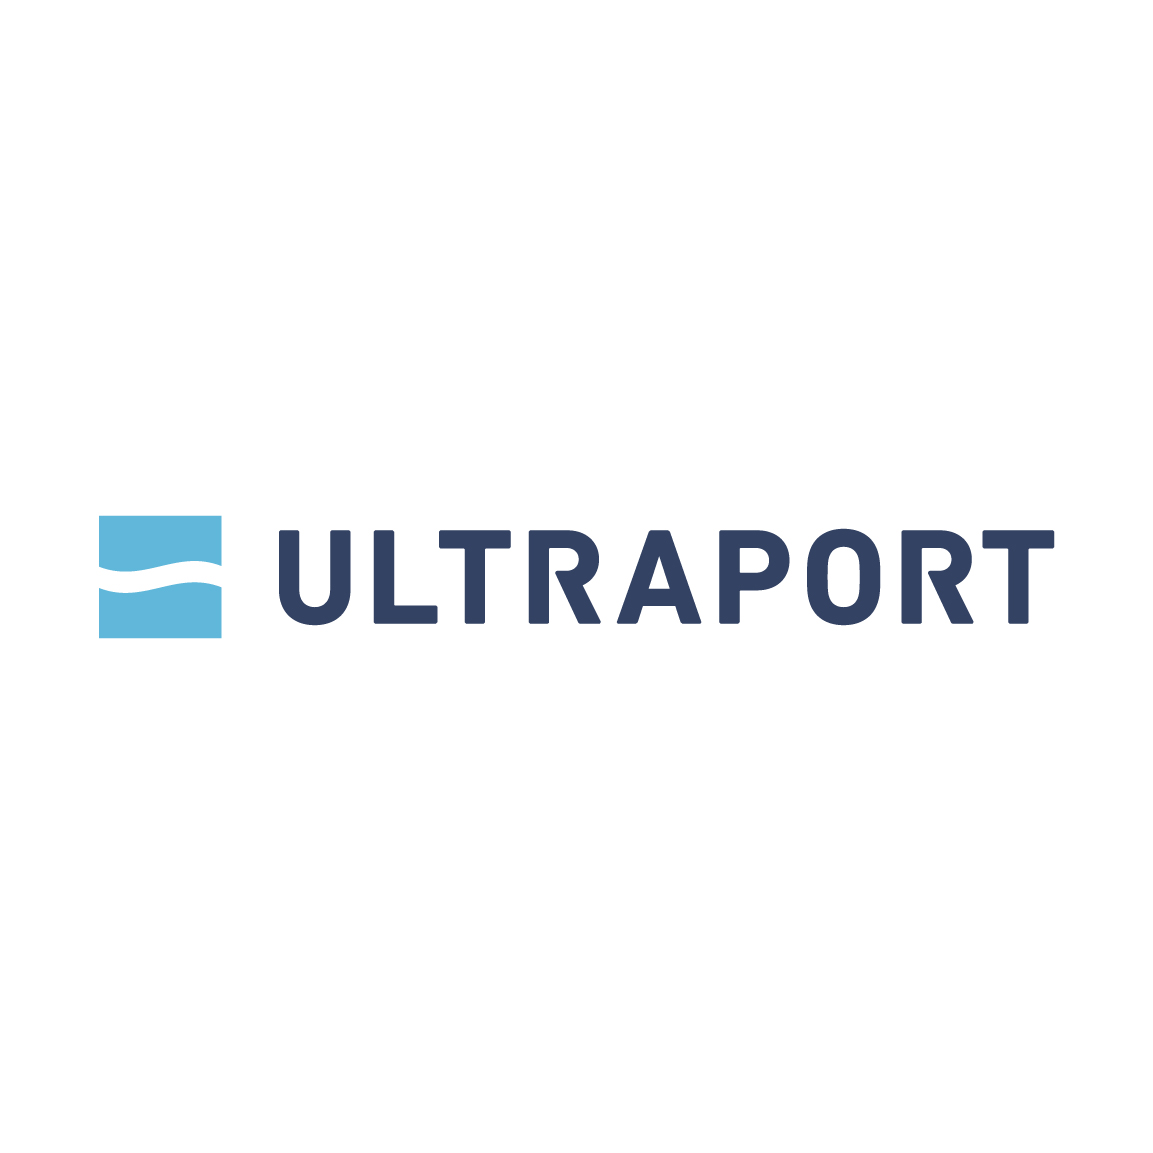 ULTRPORT